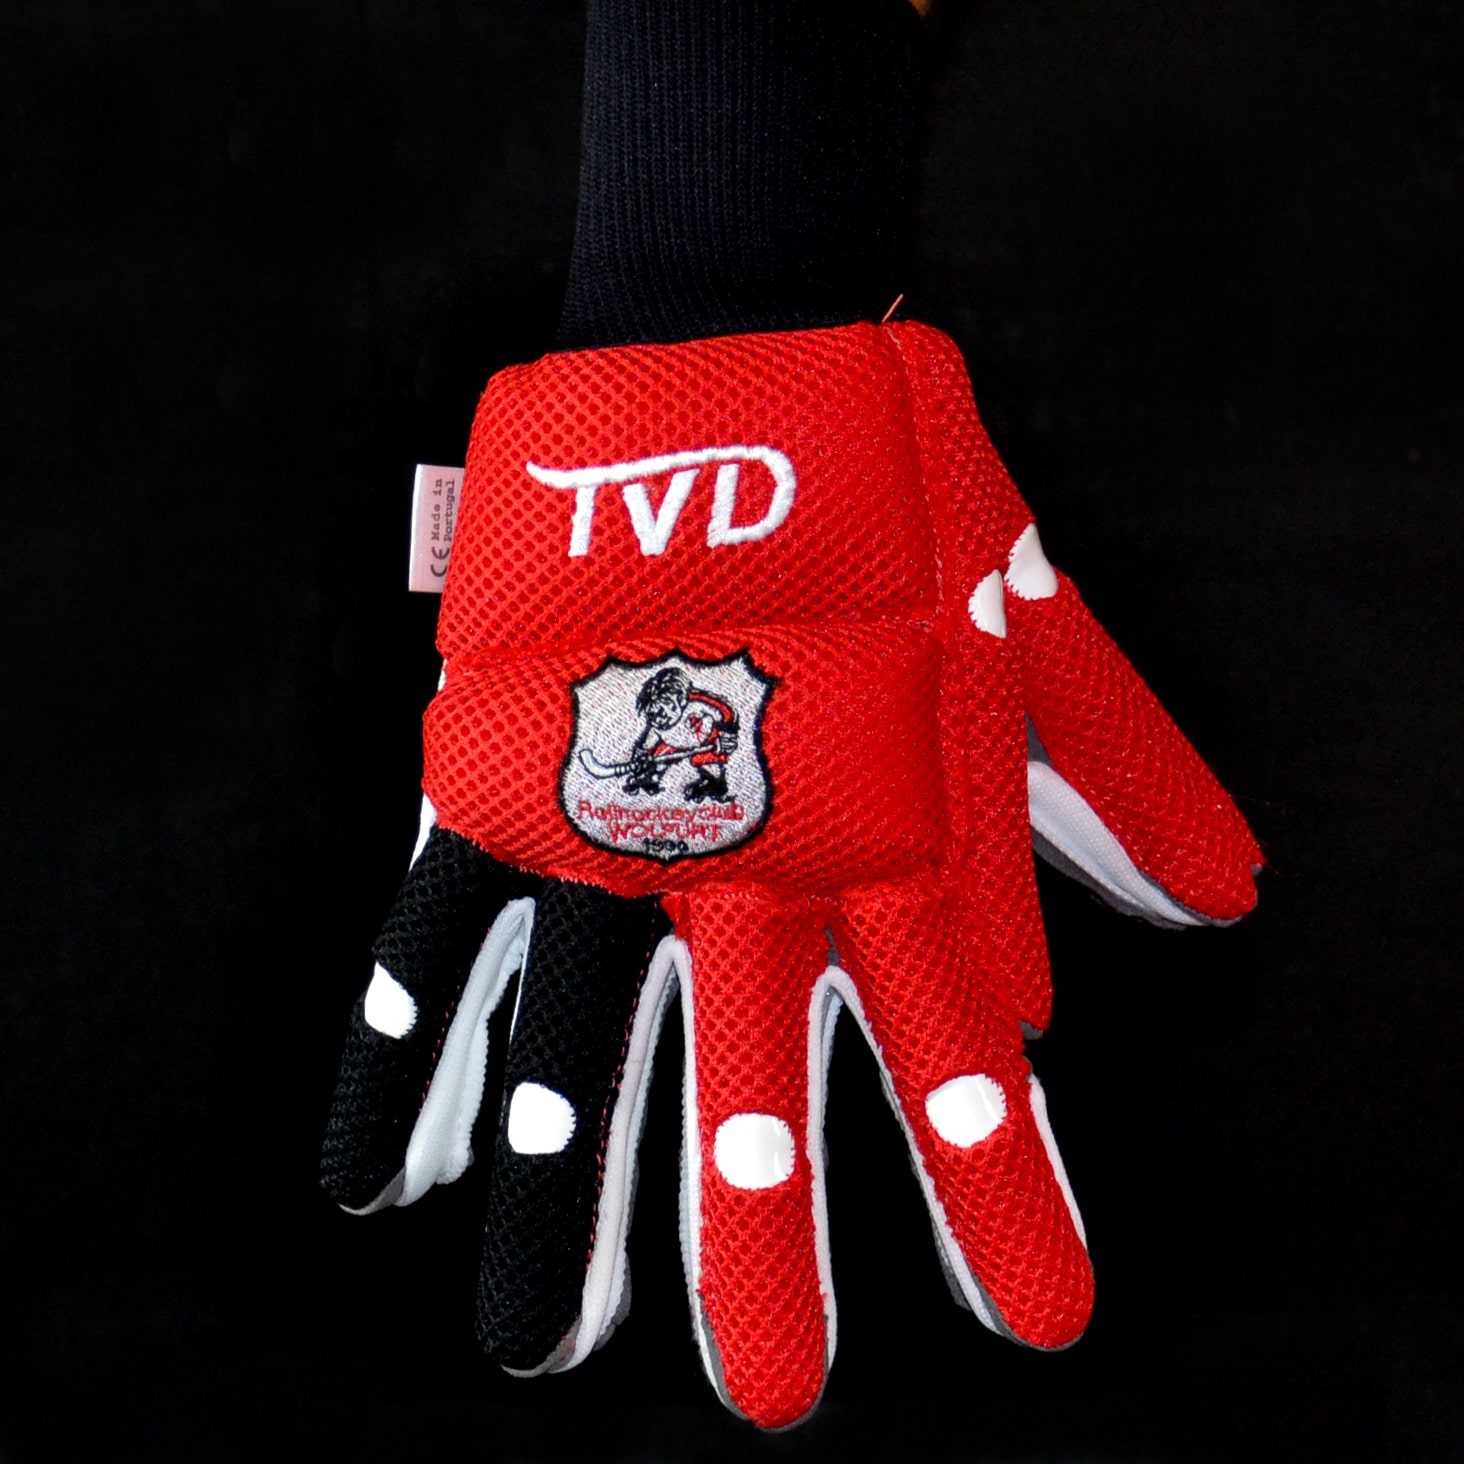 TVD Spider Handschuhe